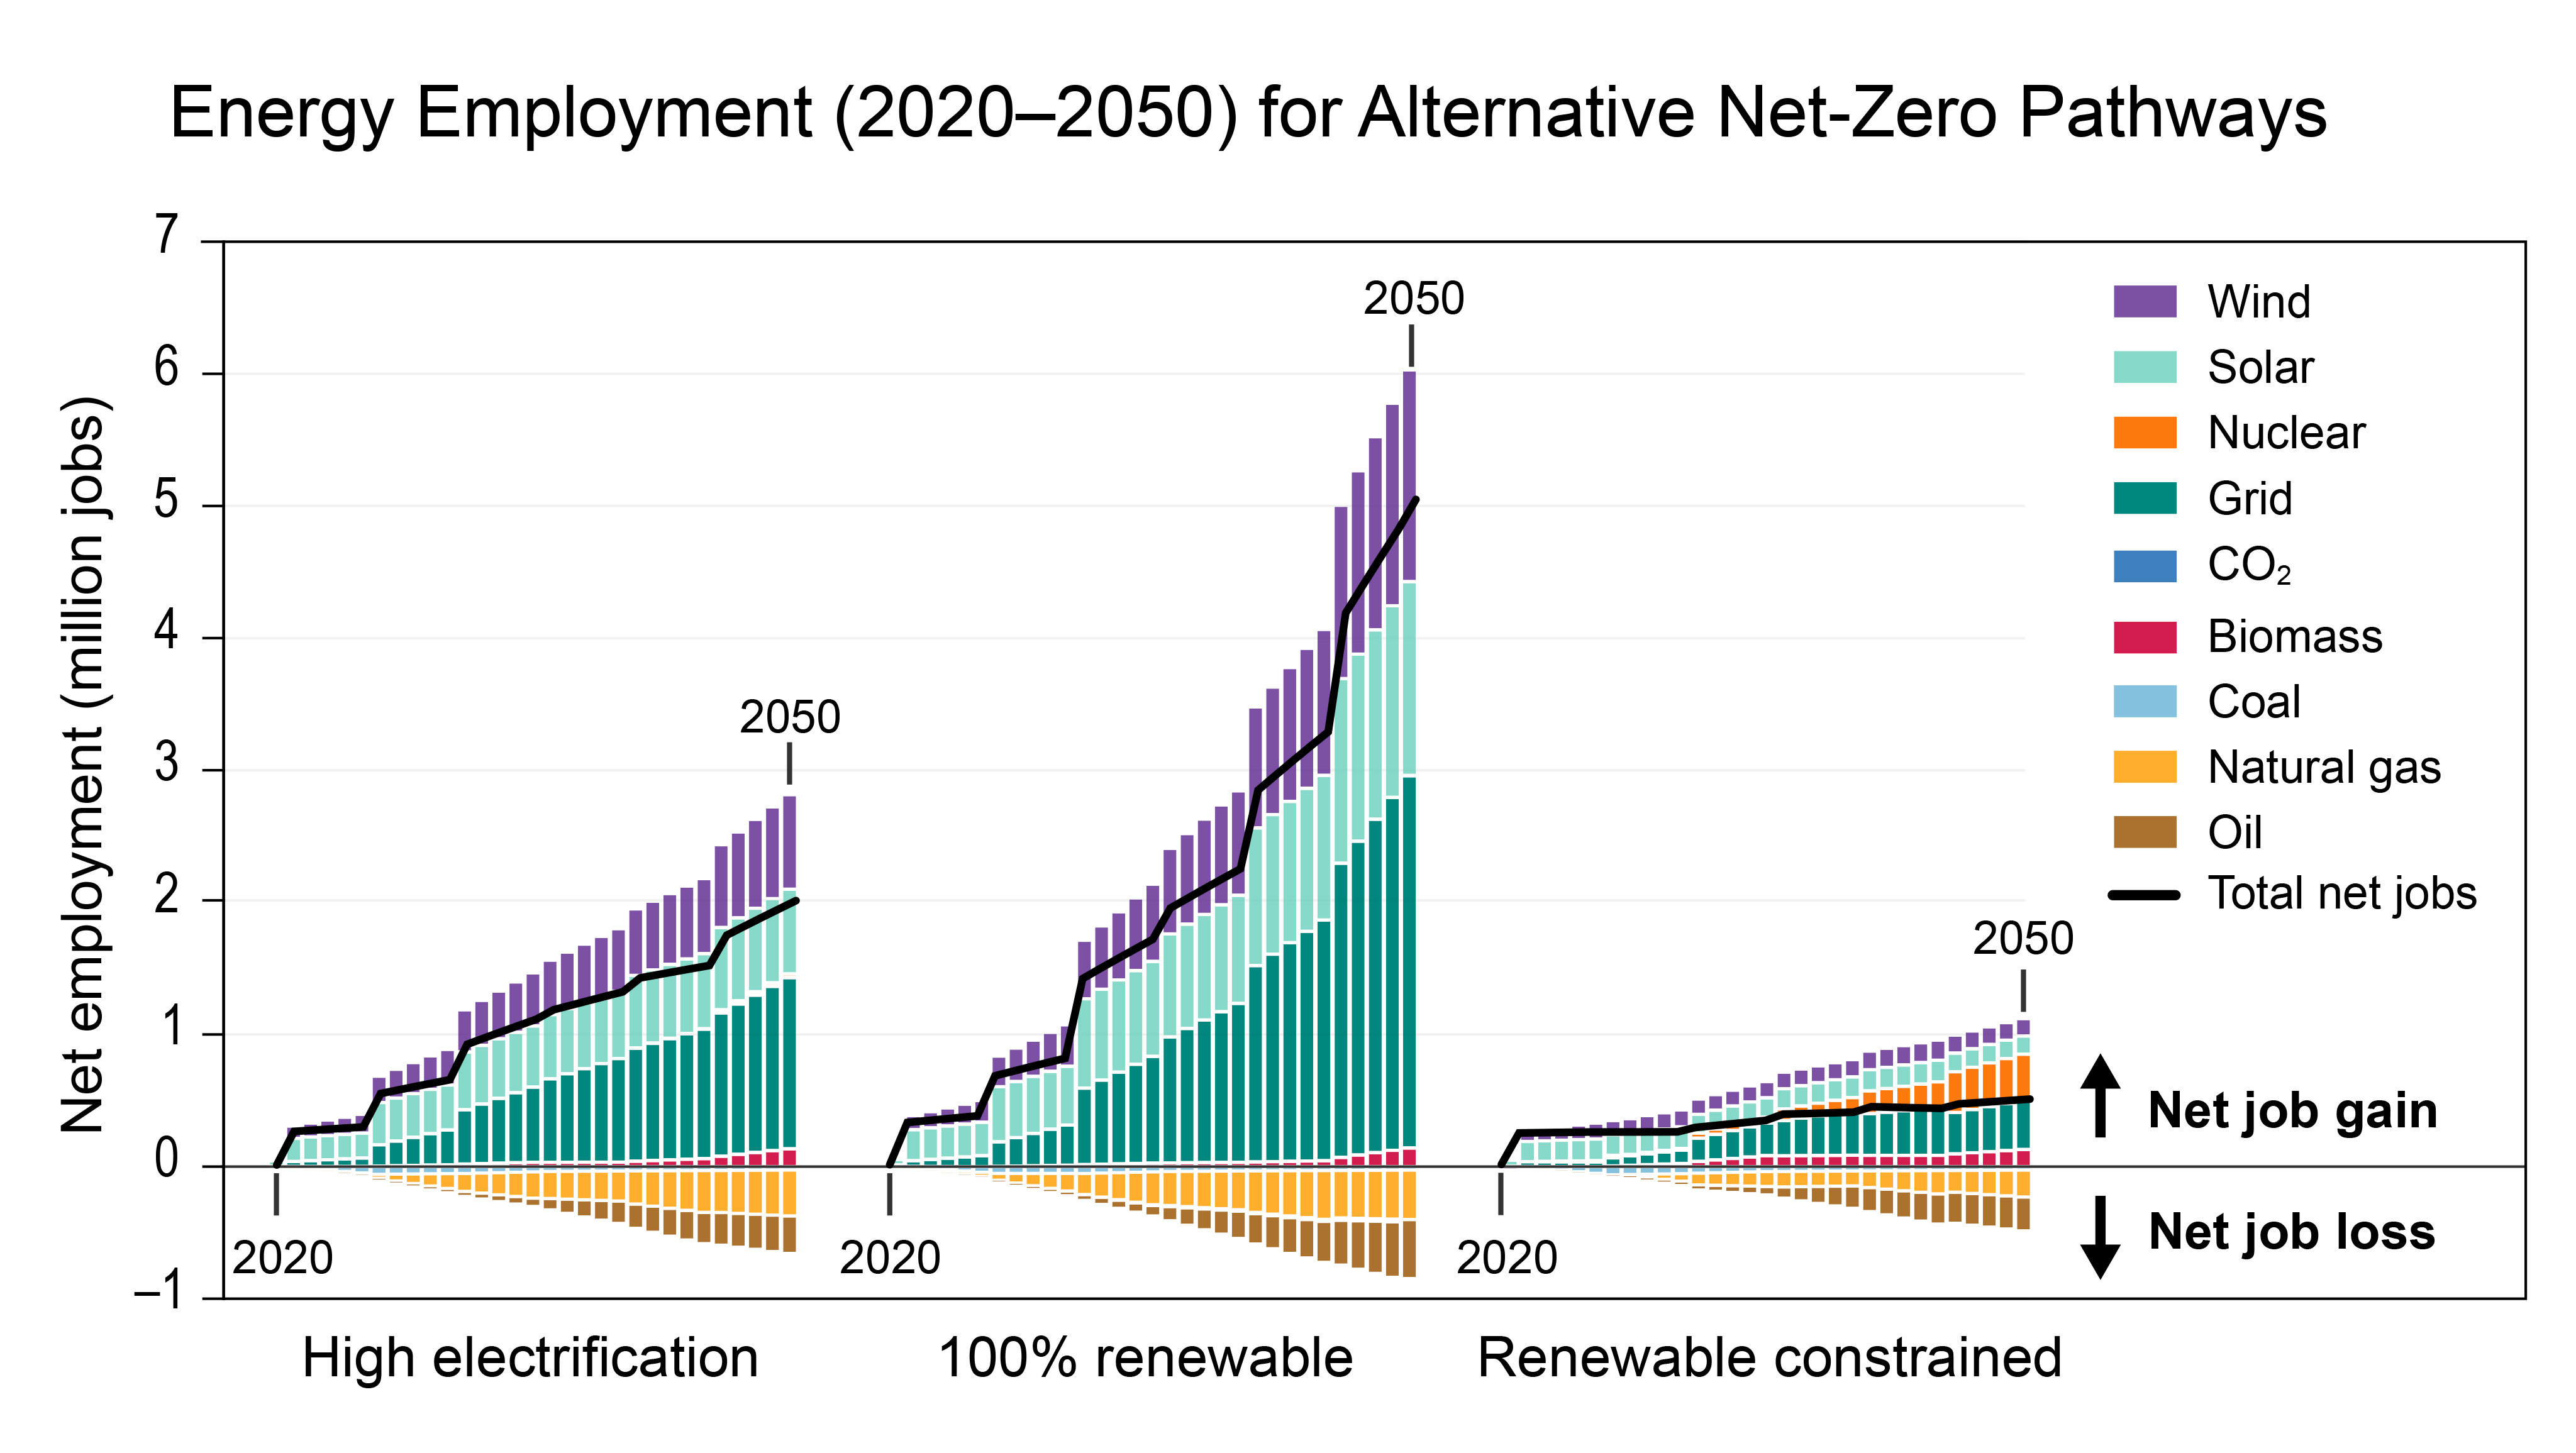 Energy Employment from 2020 to 2050 for Alternative Net-Zero Pathways